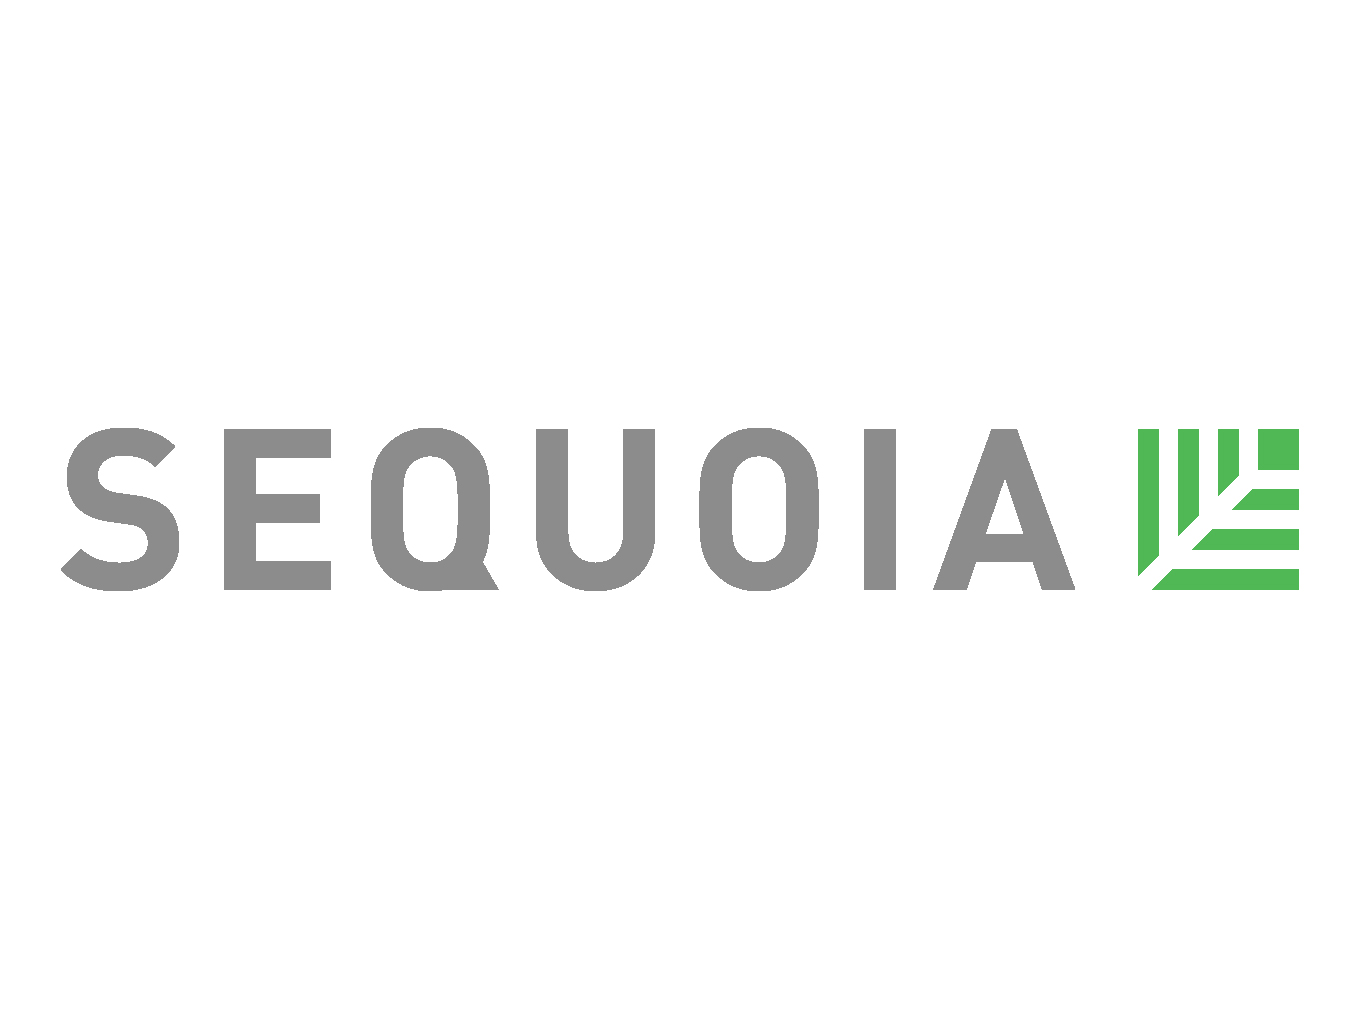 Sequoia India leadership change report